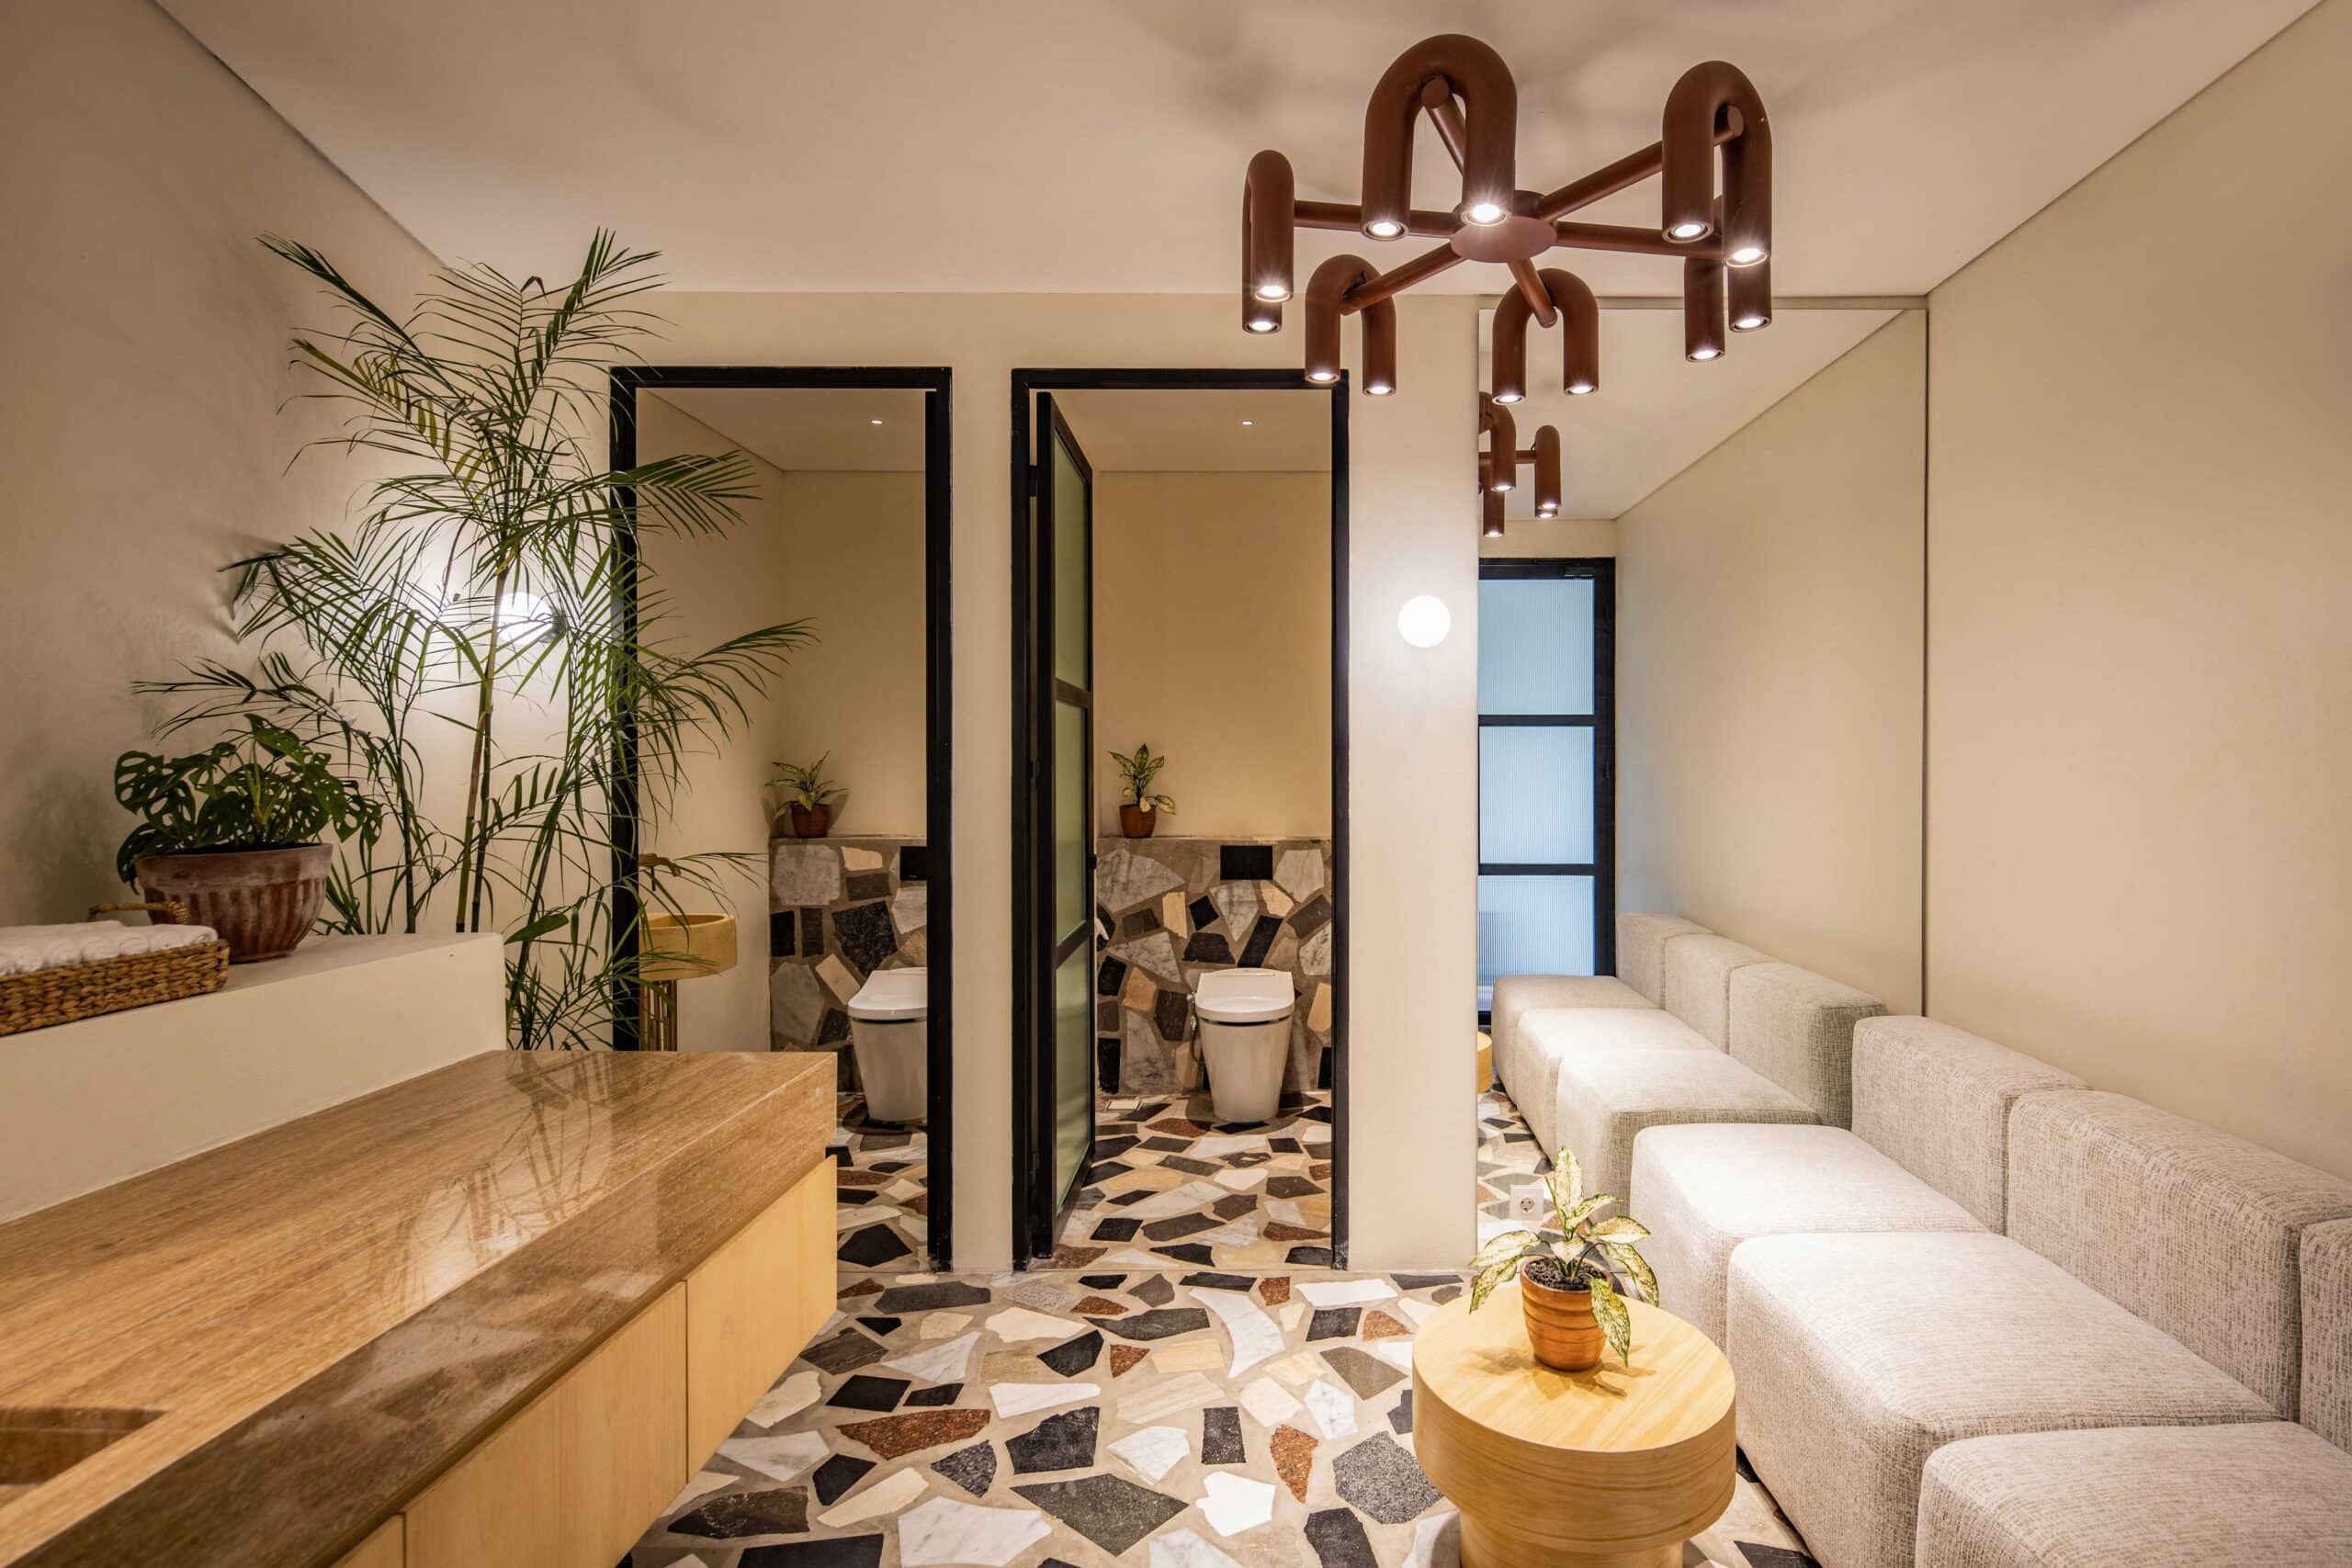 Restaurant Design - Luma Bali - Interior Design - Architecture - Architect Bali - Bathroom Design